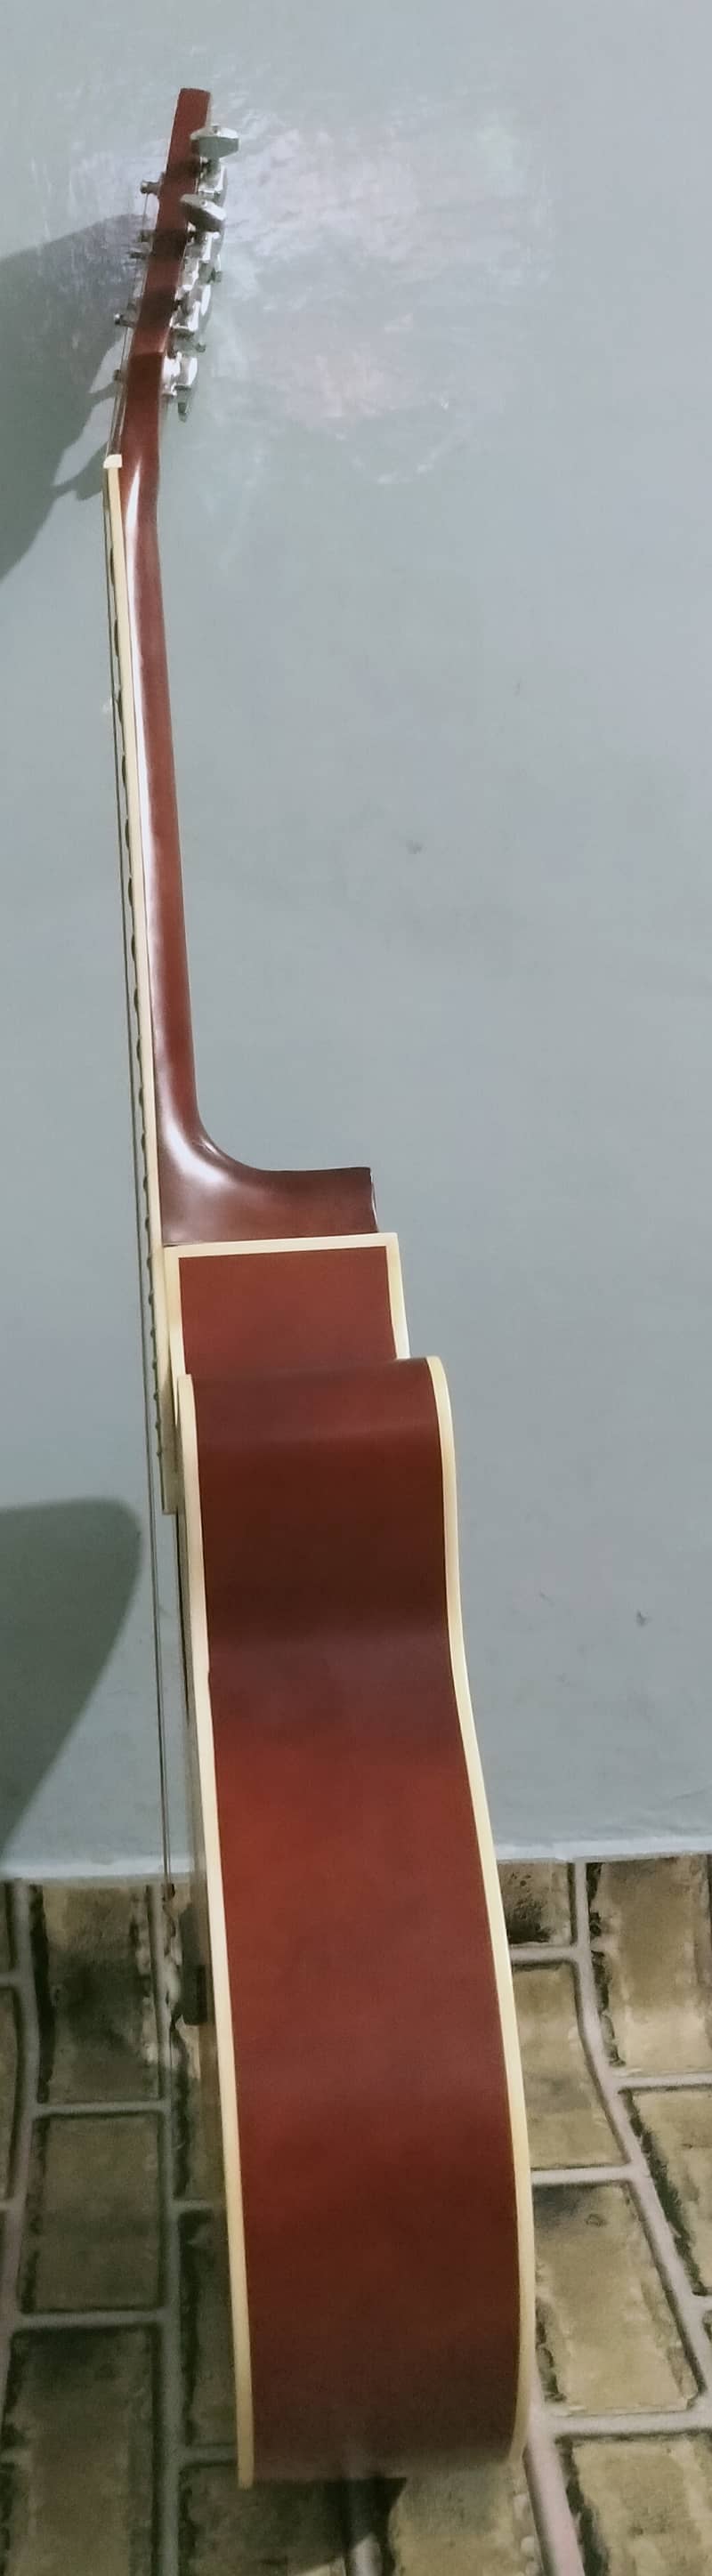 Acoustic Guitar 5